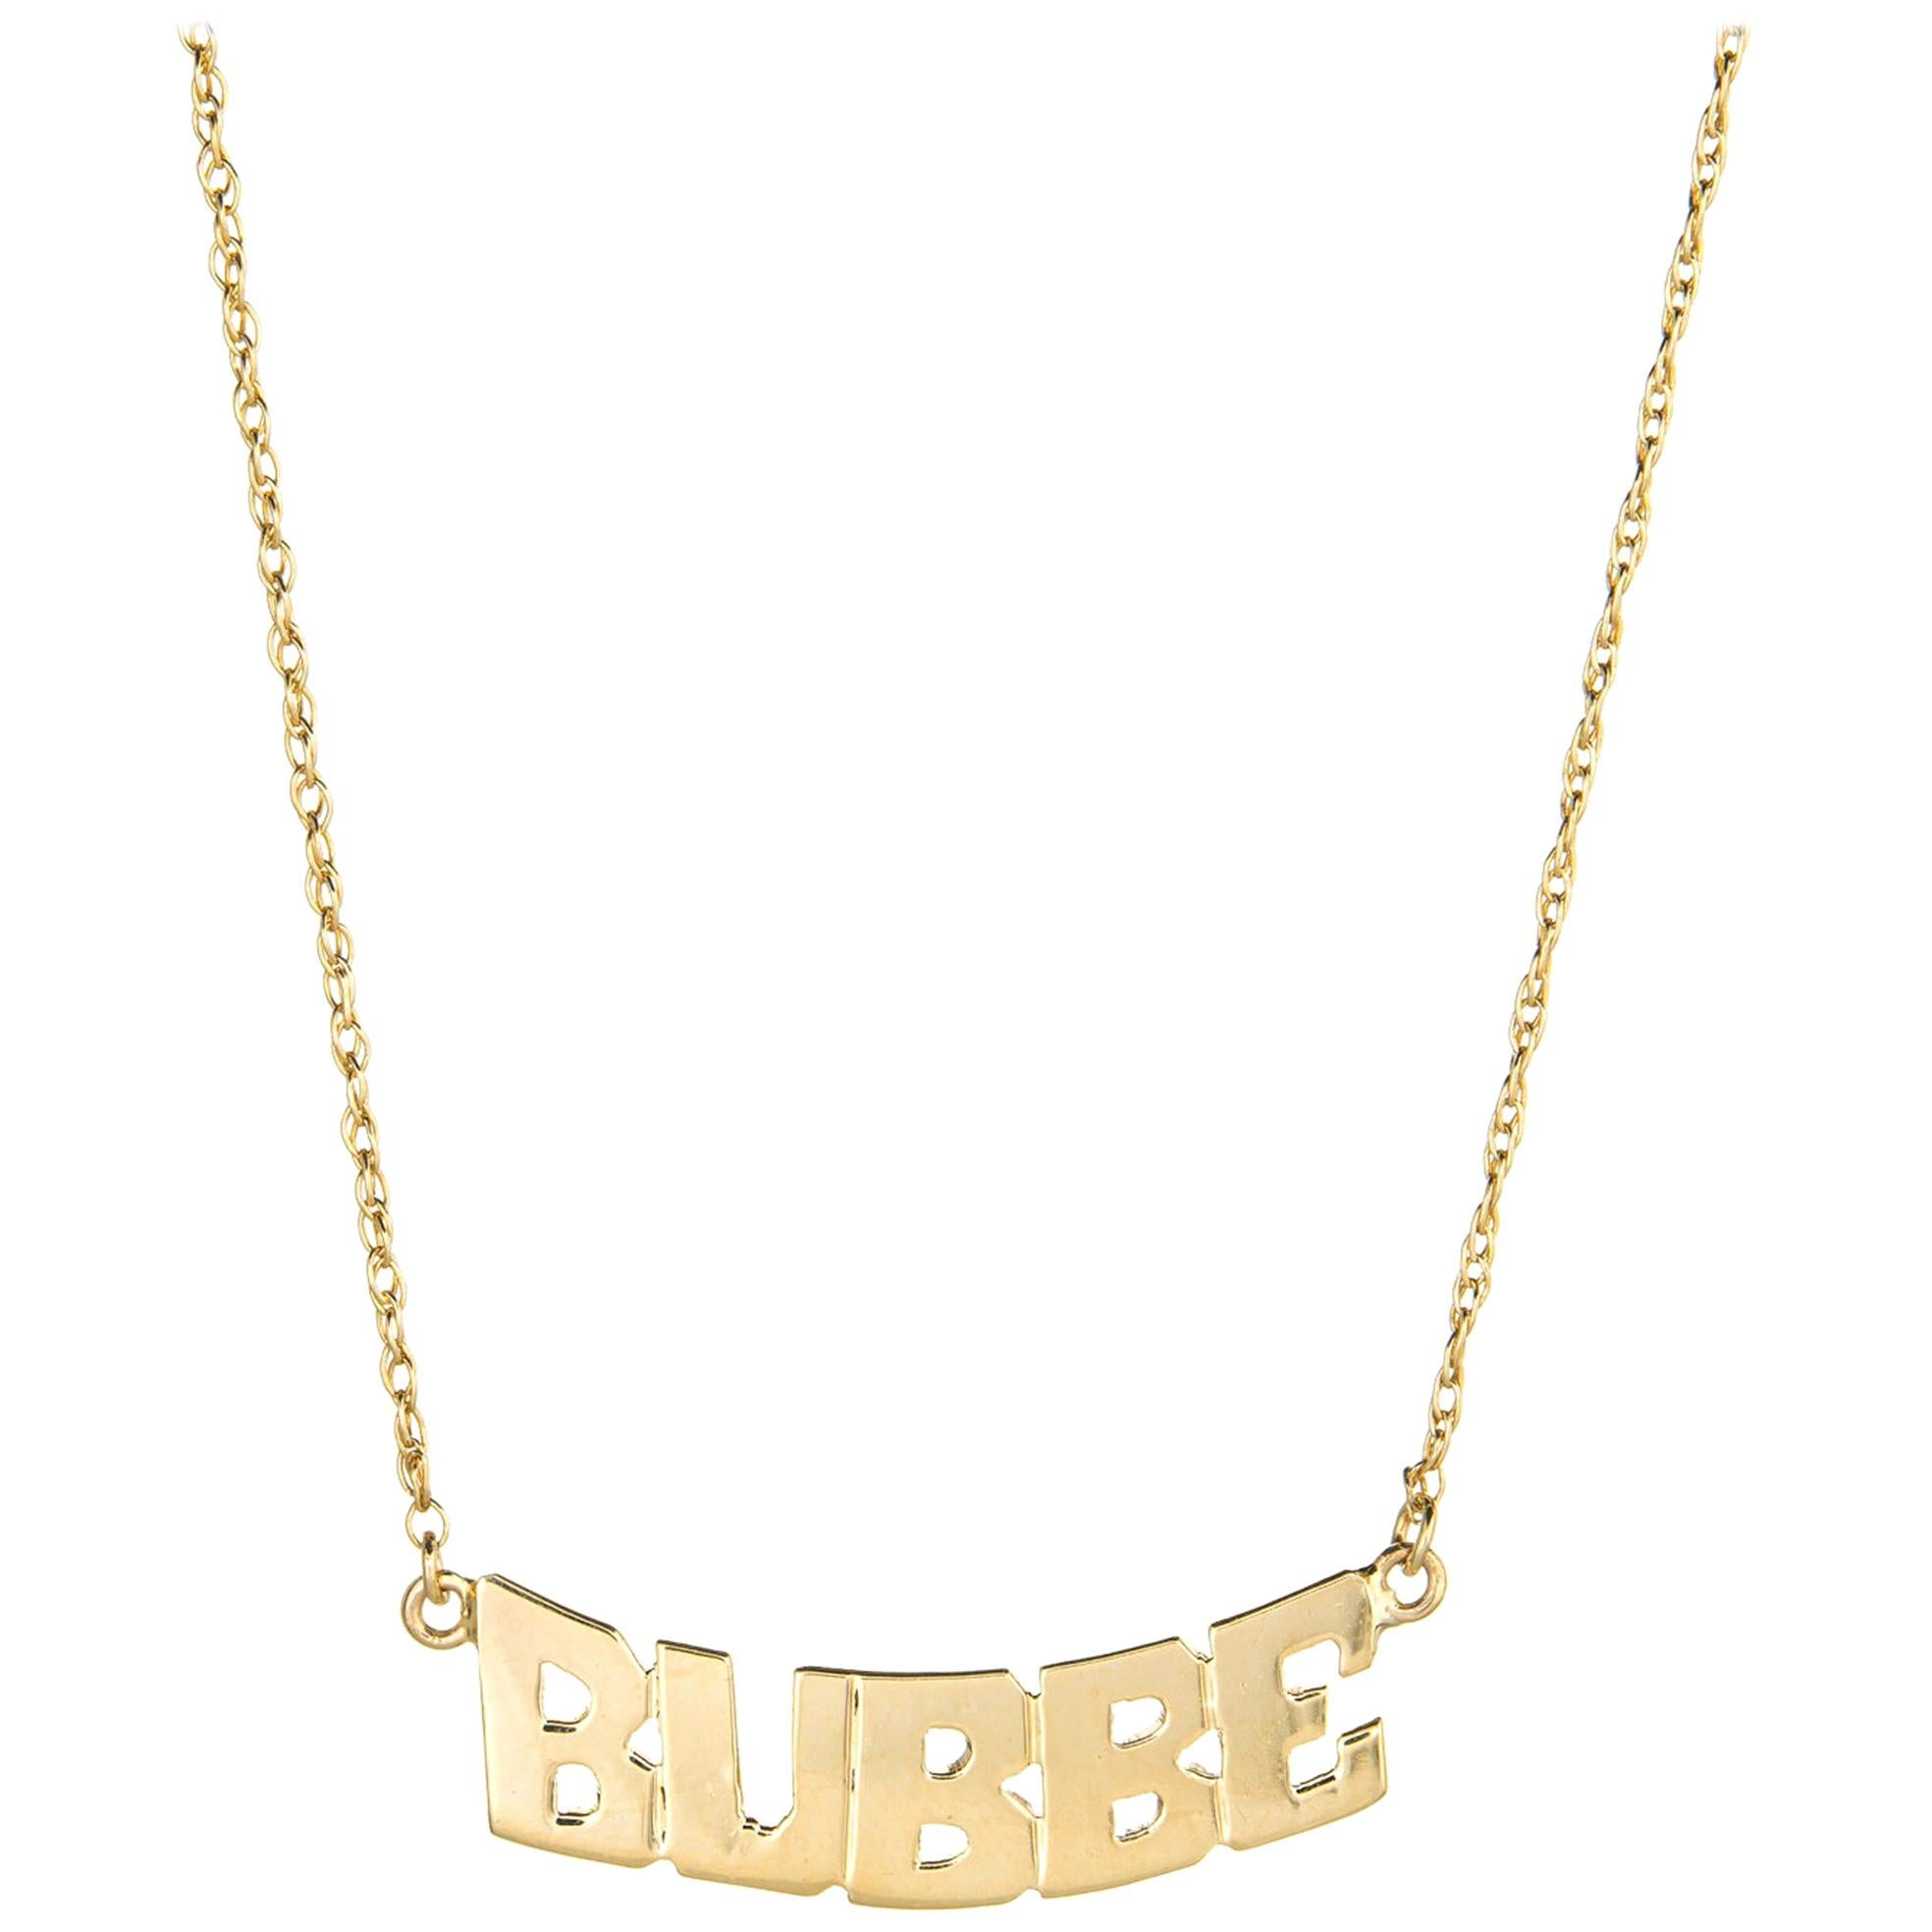 Vintage Bubbe Necklace 14 Karat Gold Grandmother Jewelry Jewish Name Plate